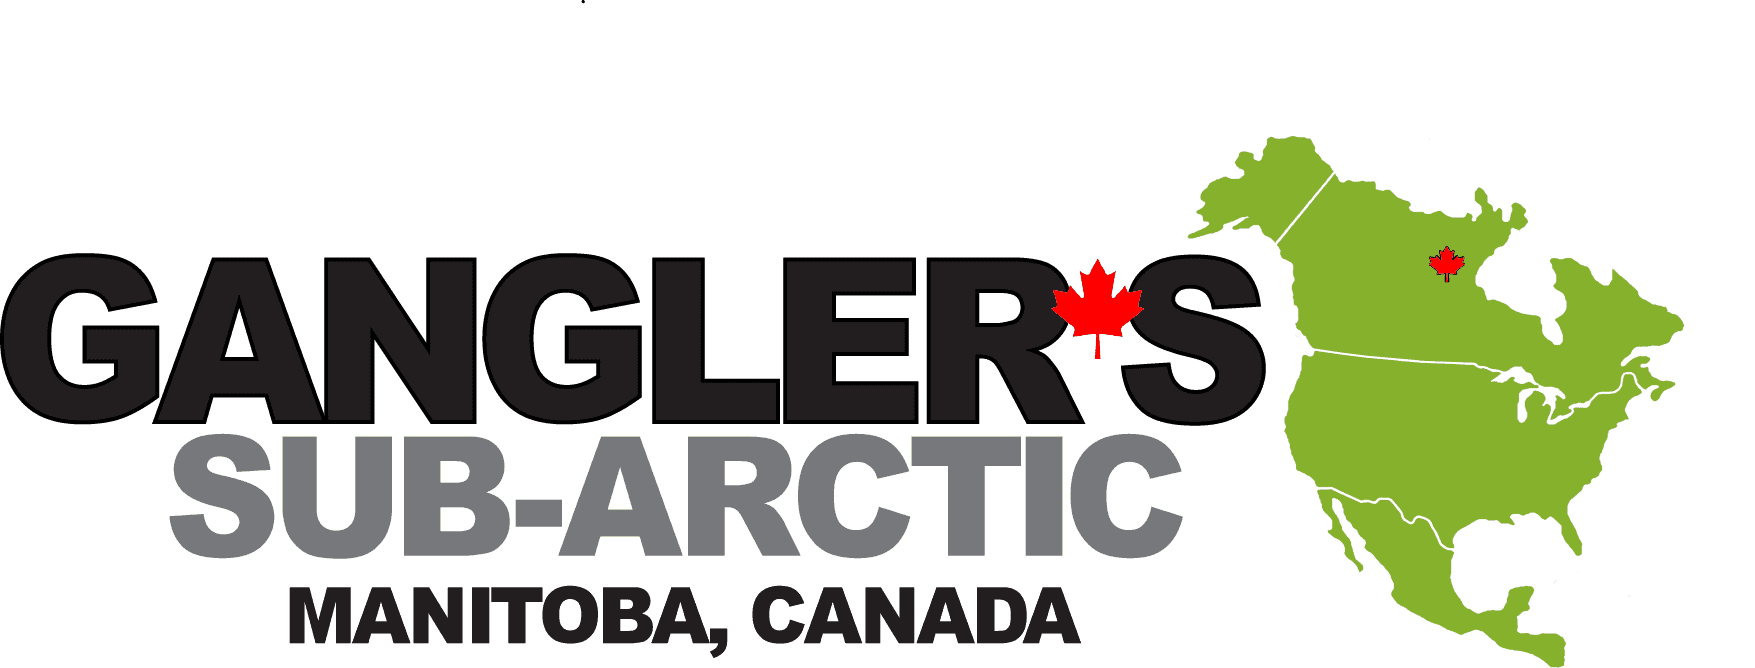 Ganglers Sub-Arctic Logo